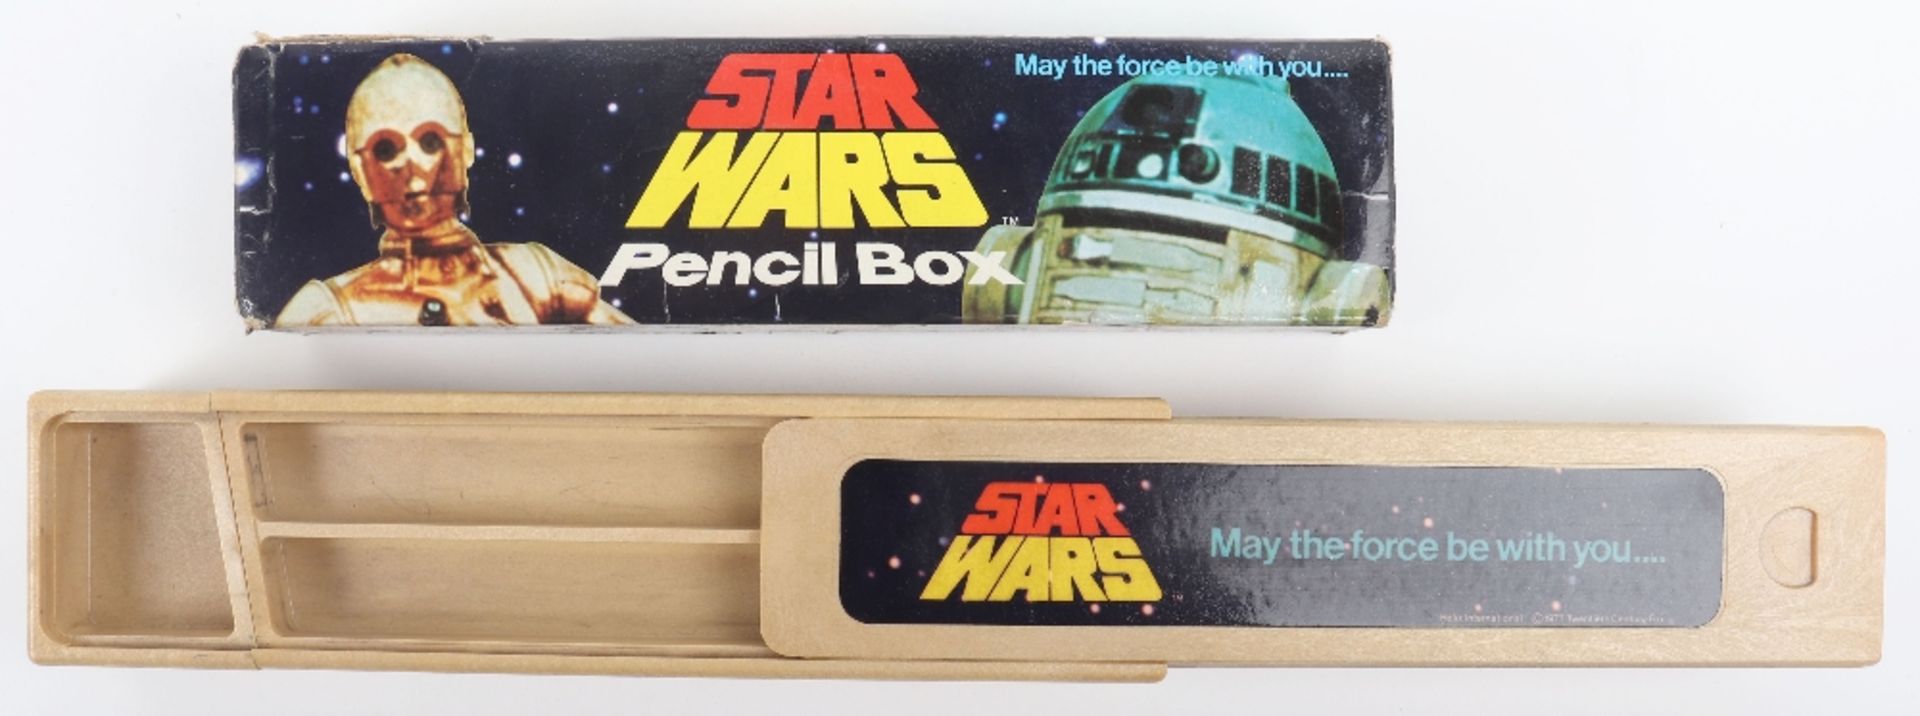 Vintage Star Wars stationery and Gary Kurtz product samples - Bild 6 aus 9